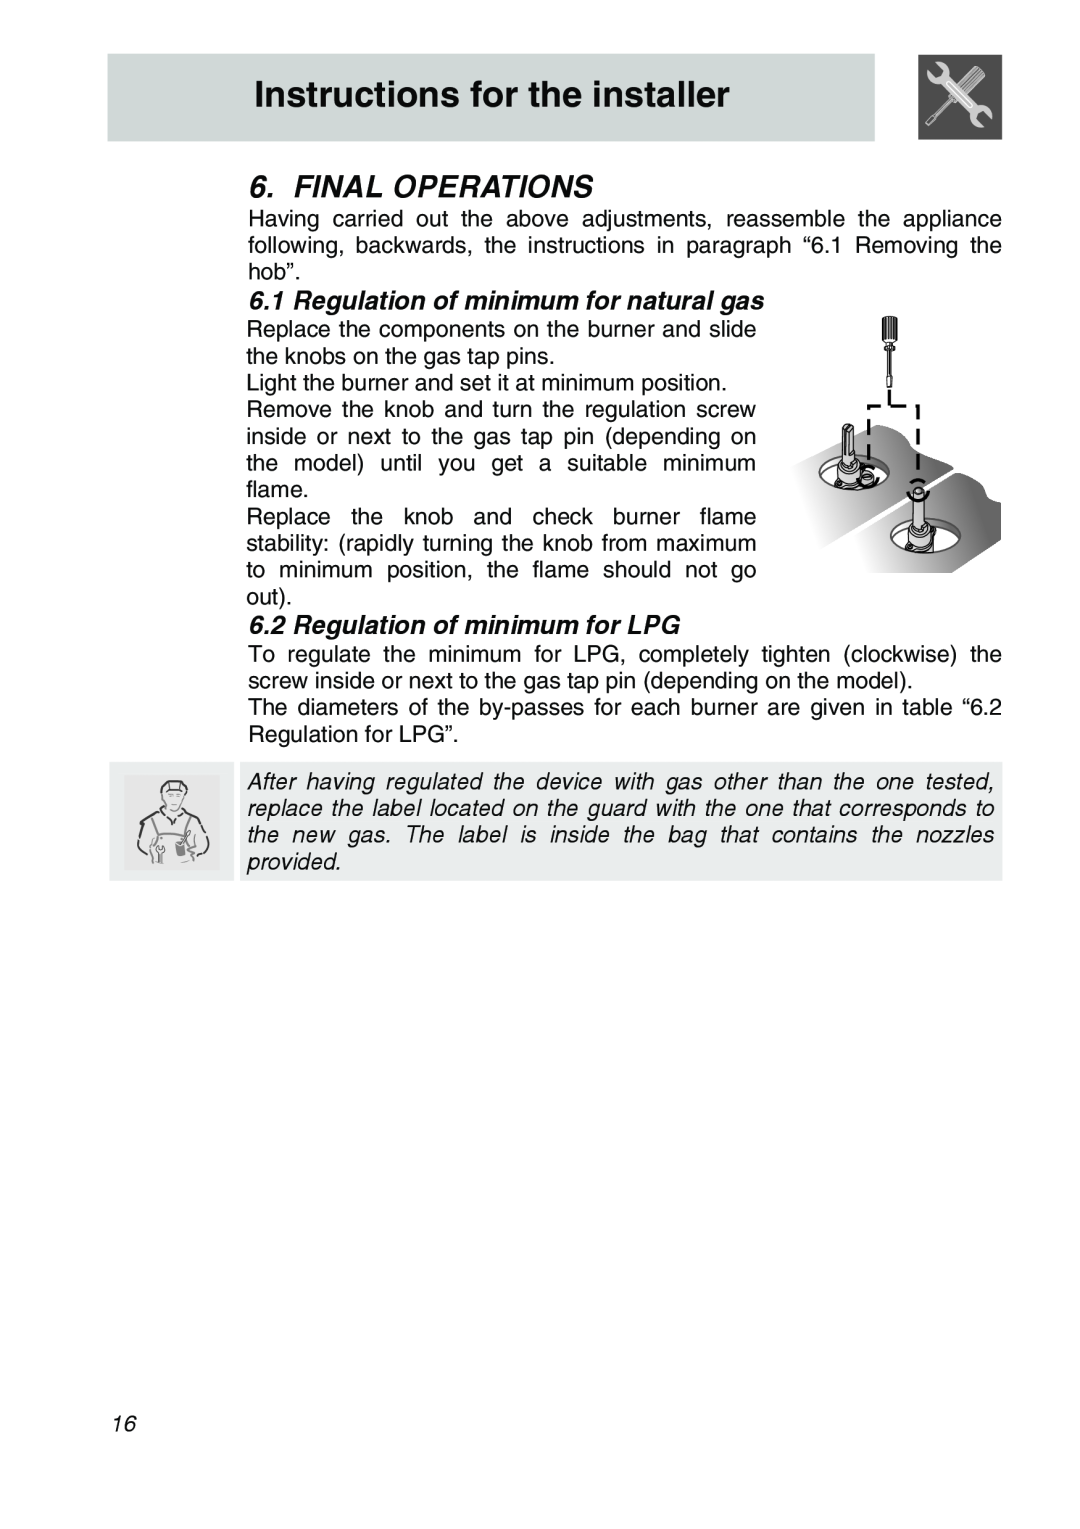 Smeg CIR60X3 manual Final Operations, Regulation of minimum for natural gas, Regulation of minimum for LPG 